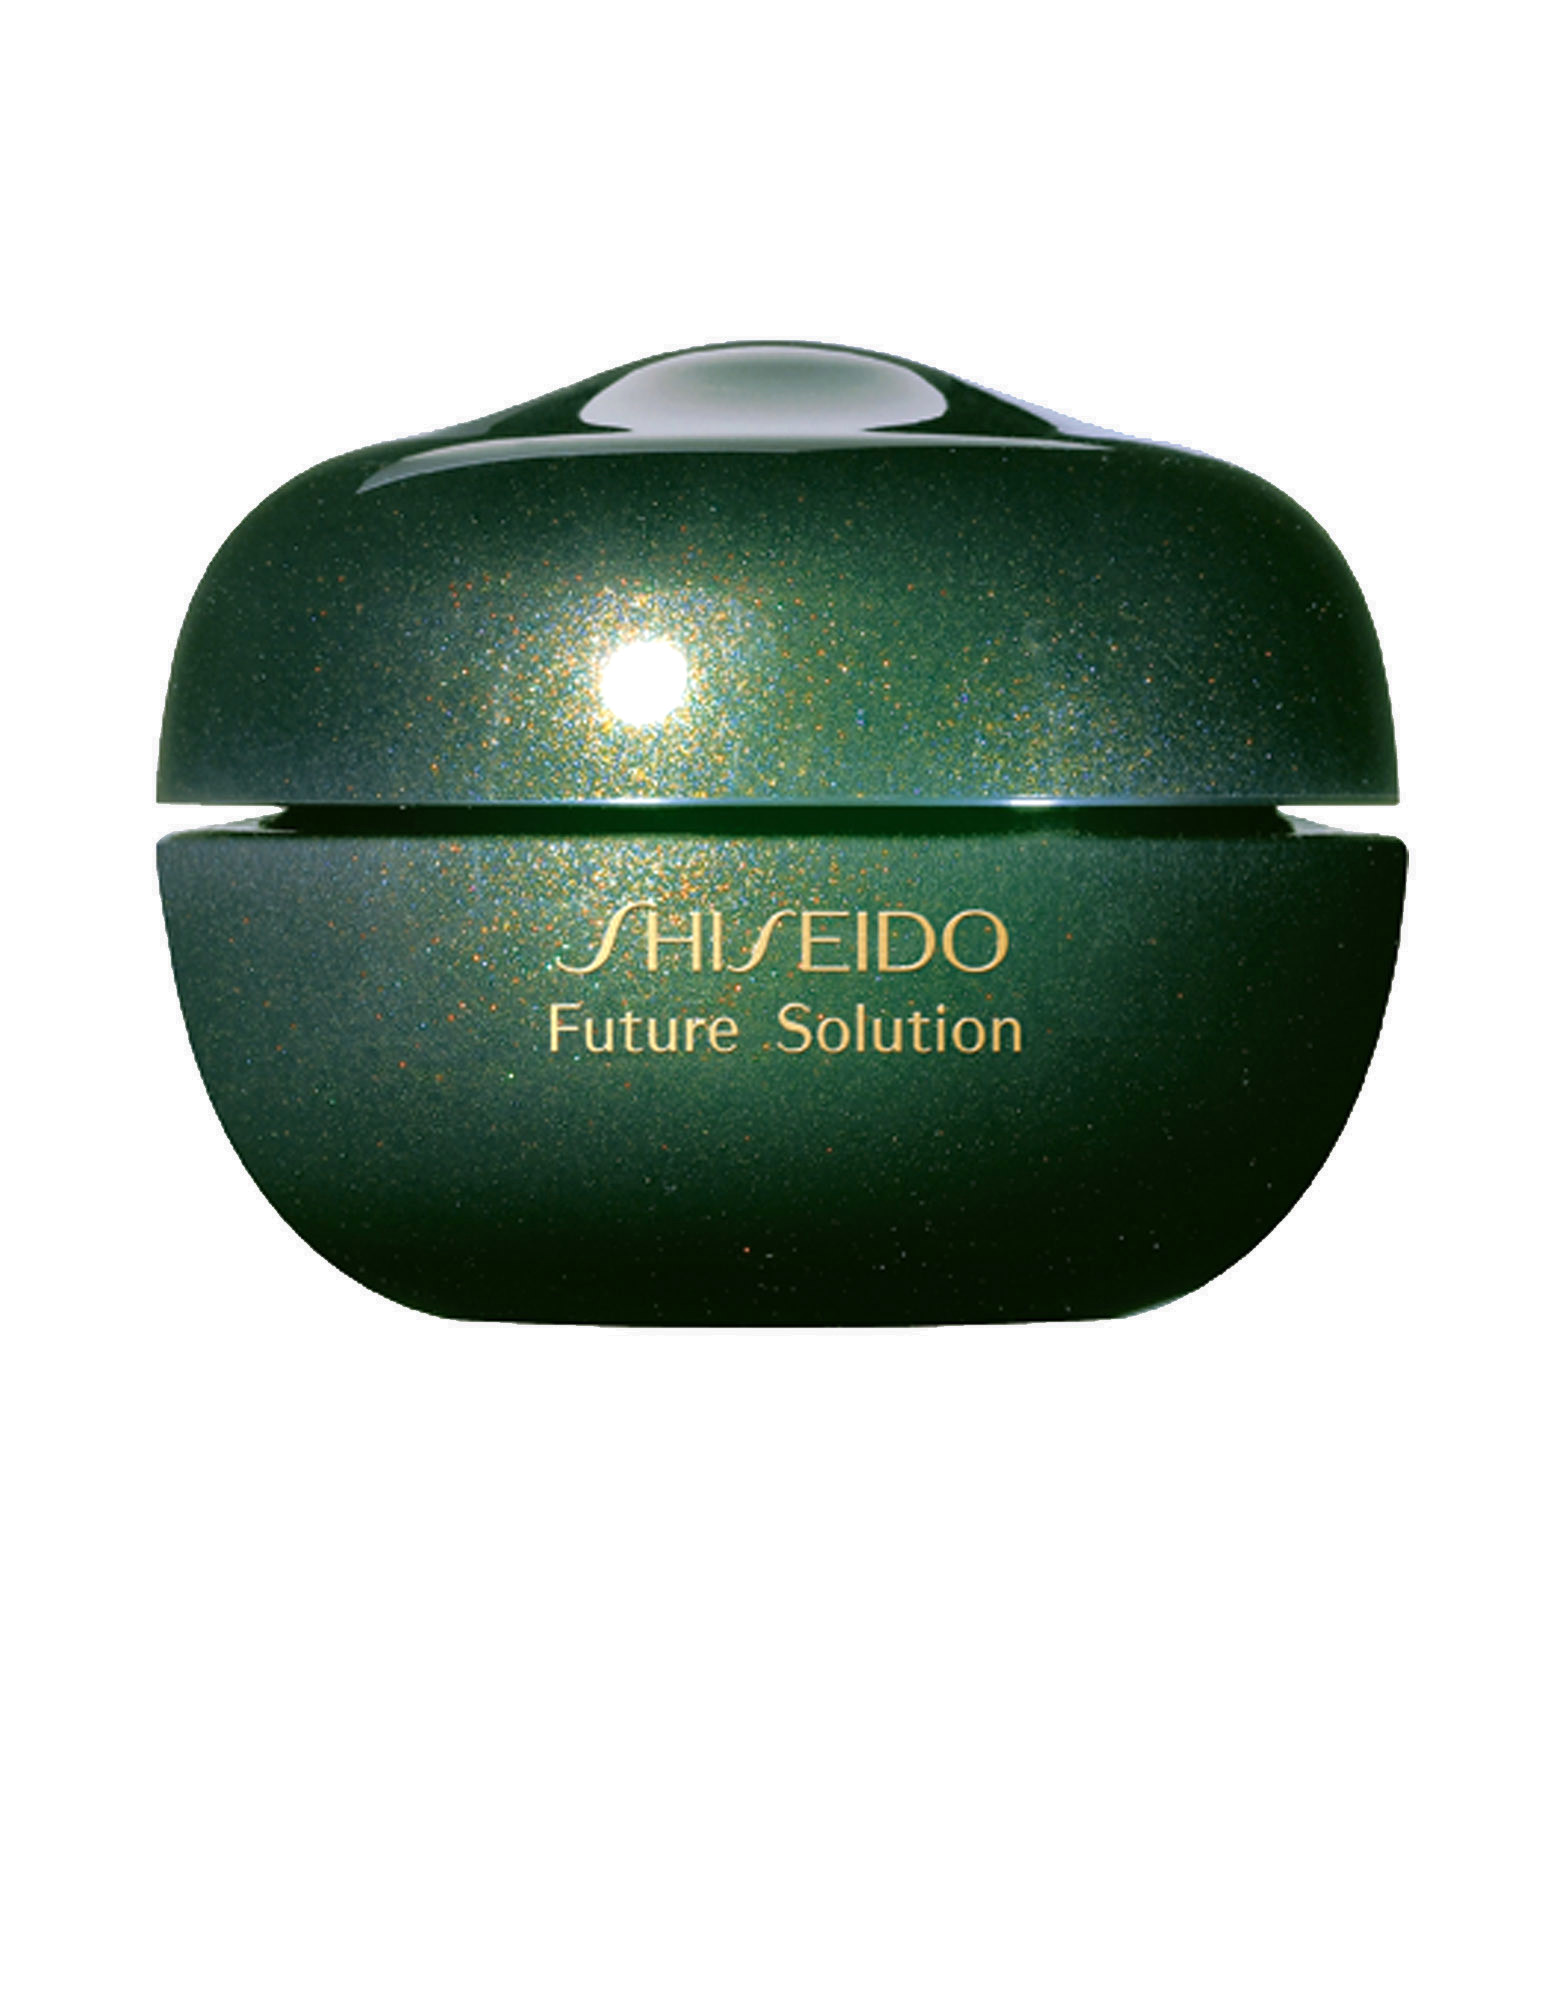 Shiseido solution. Шисейдо крем вокруг глаз. Shary Snail Eye Lip Contour Cream. Regenerating Eye Lift Essence Cream. Shiseido Future solution LX ночной крем чье производство.